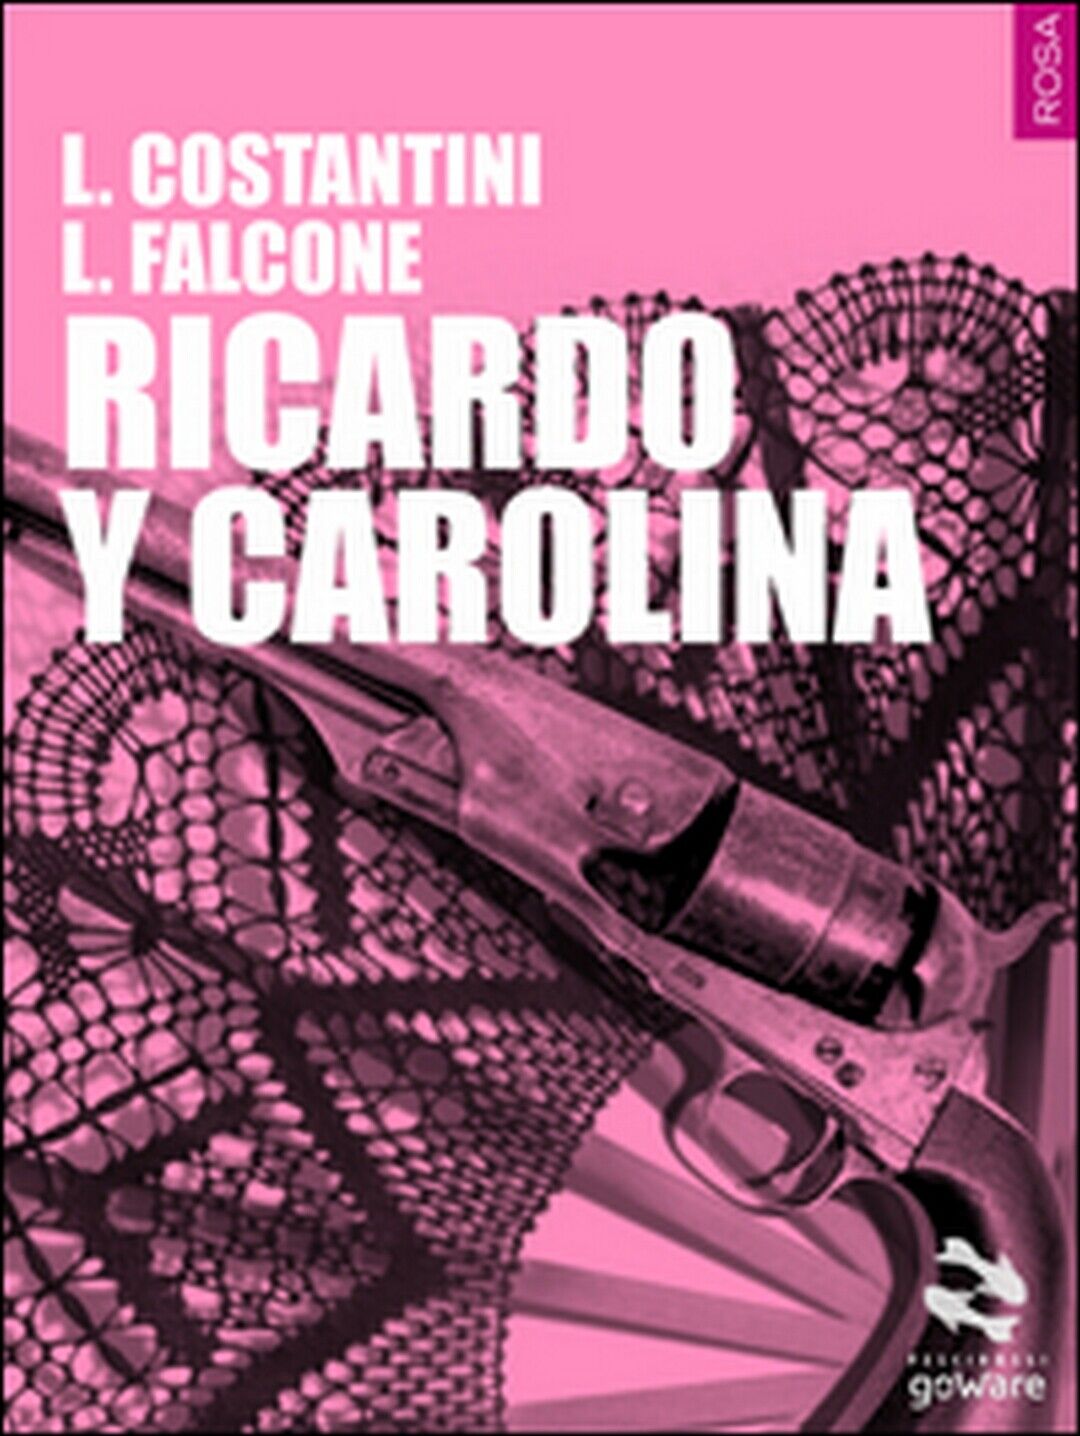 Ricardo y Carolina  di Laura Costantini, Loredana Falcone,  2015,  Goware